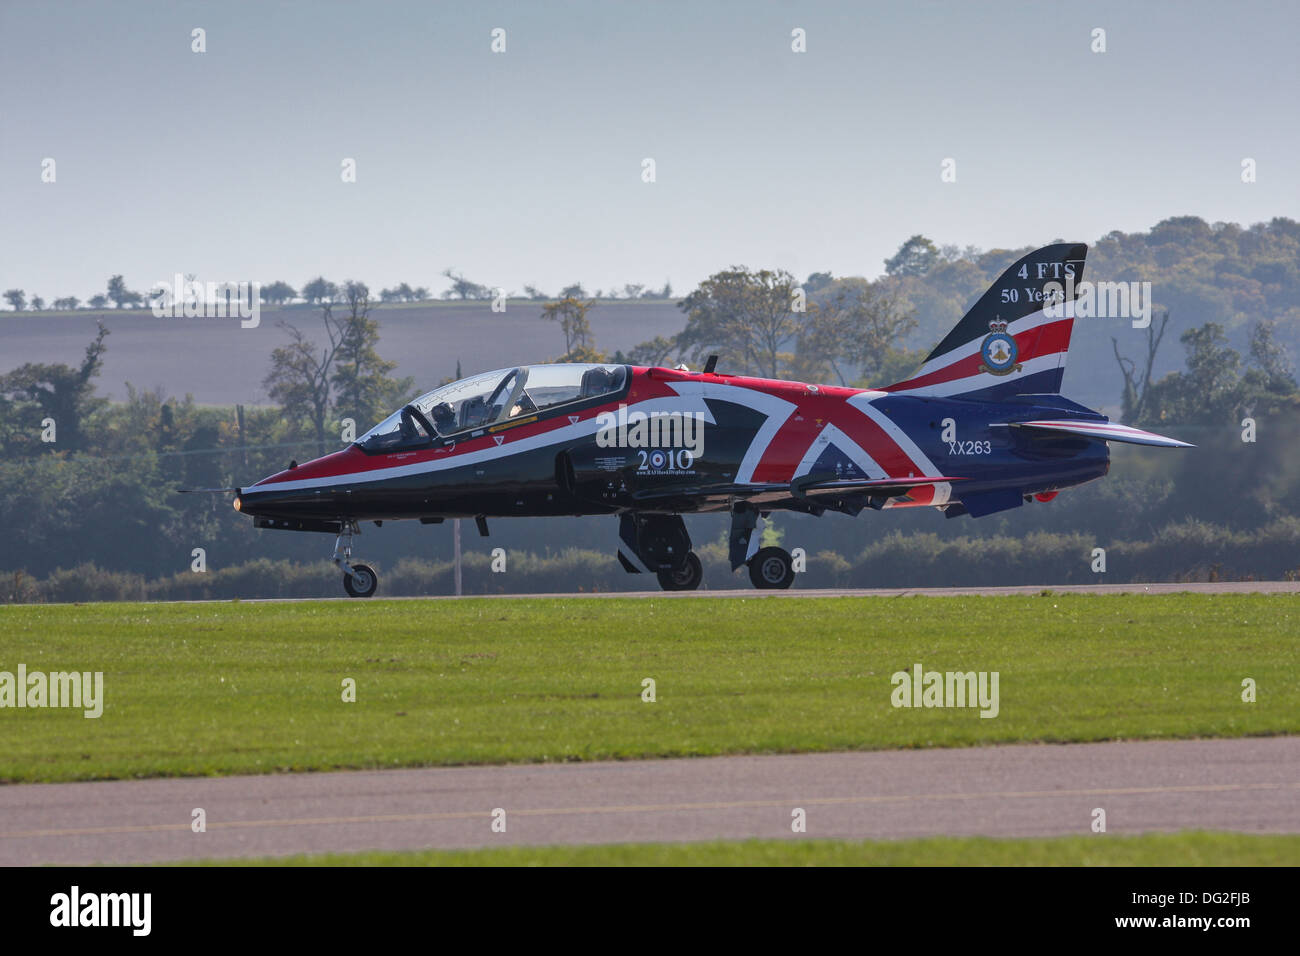 BAE Systems Hawk T1A, XX263, Royal Air Force, Red Arrows team, Duxford Airshow, Cambridgeshire, England, UK Stock Photo